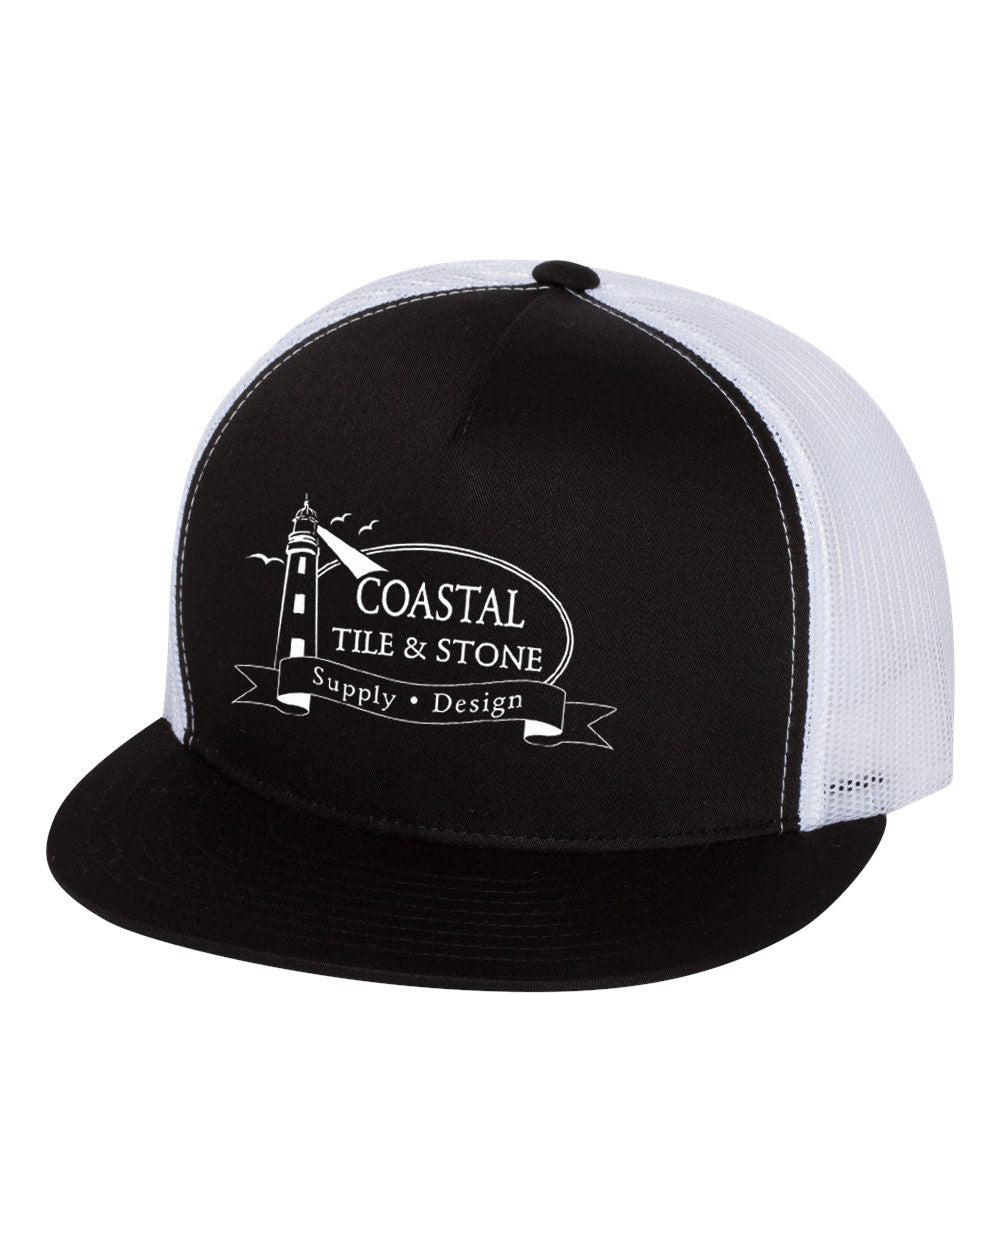 Coastal Tile & Stone - Trucker Hat (Black/White)